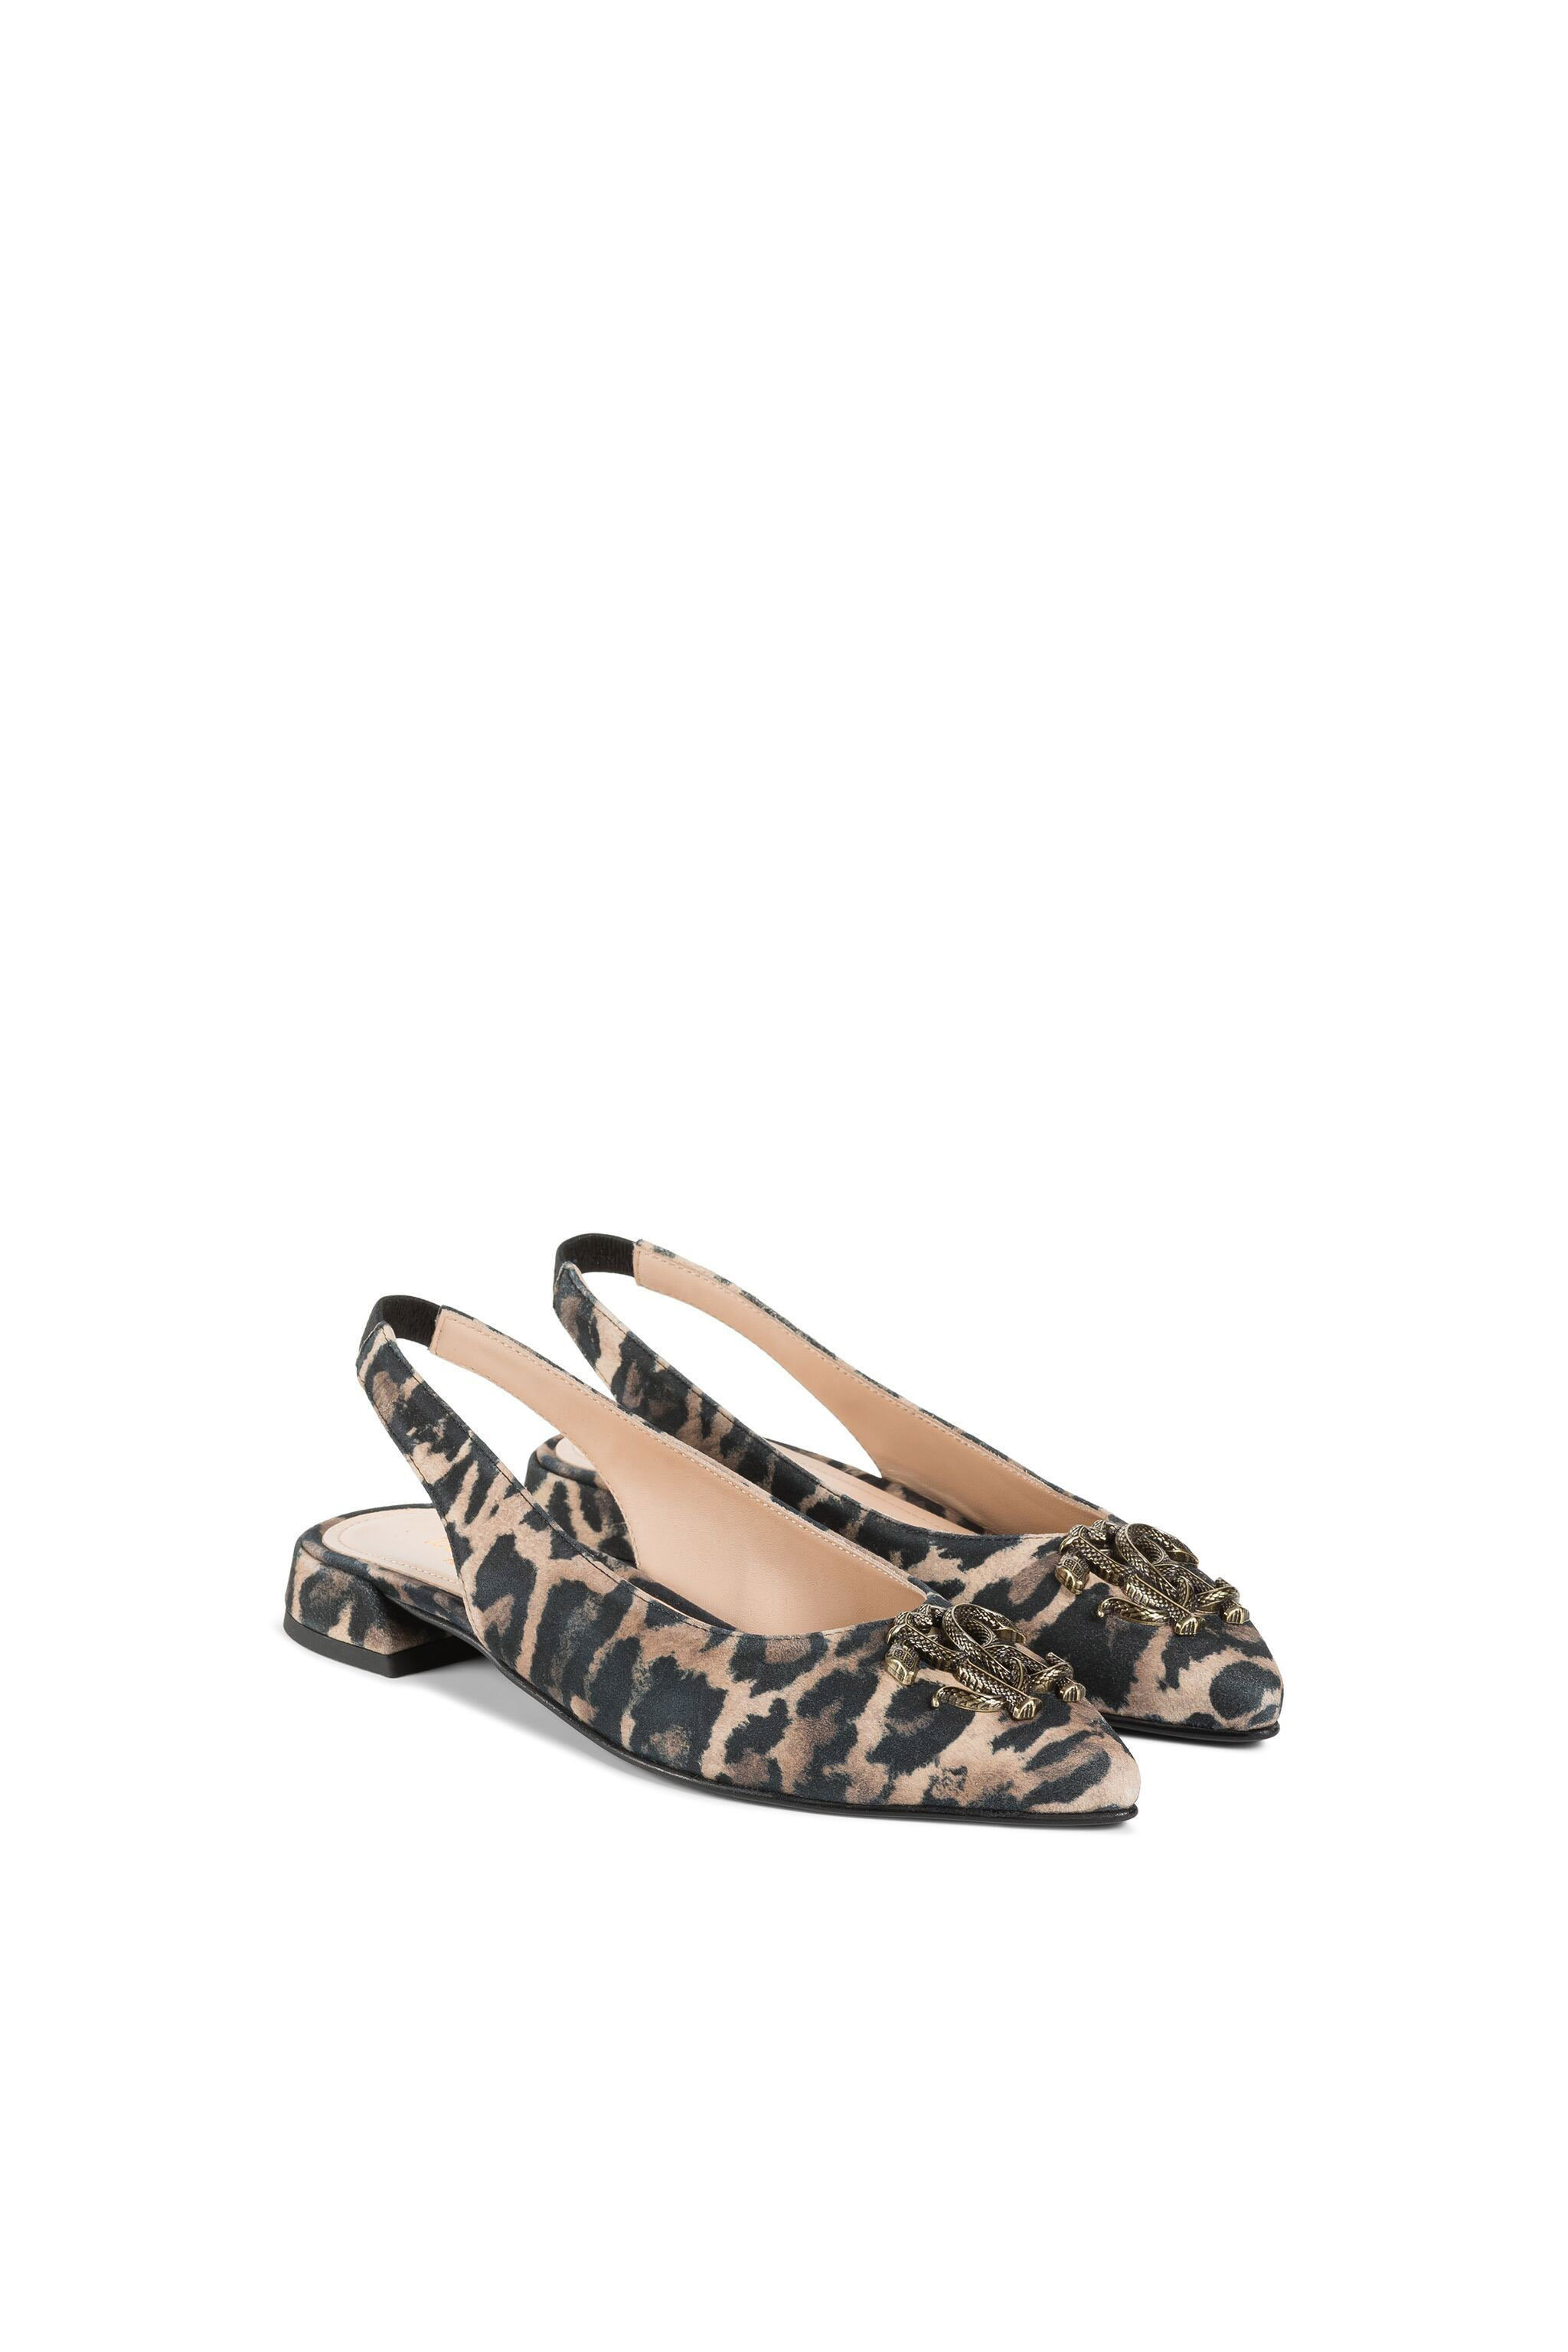 Cherie Slingback Leopard Print Pump Cherie 豹纹Slingback跟鞋425.00 超值好货